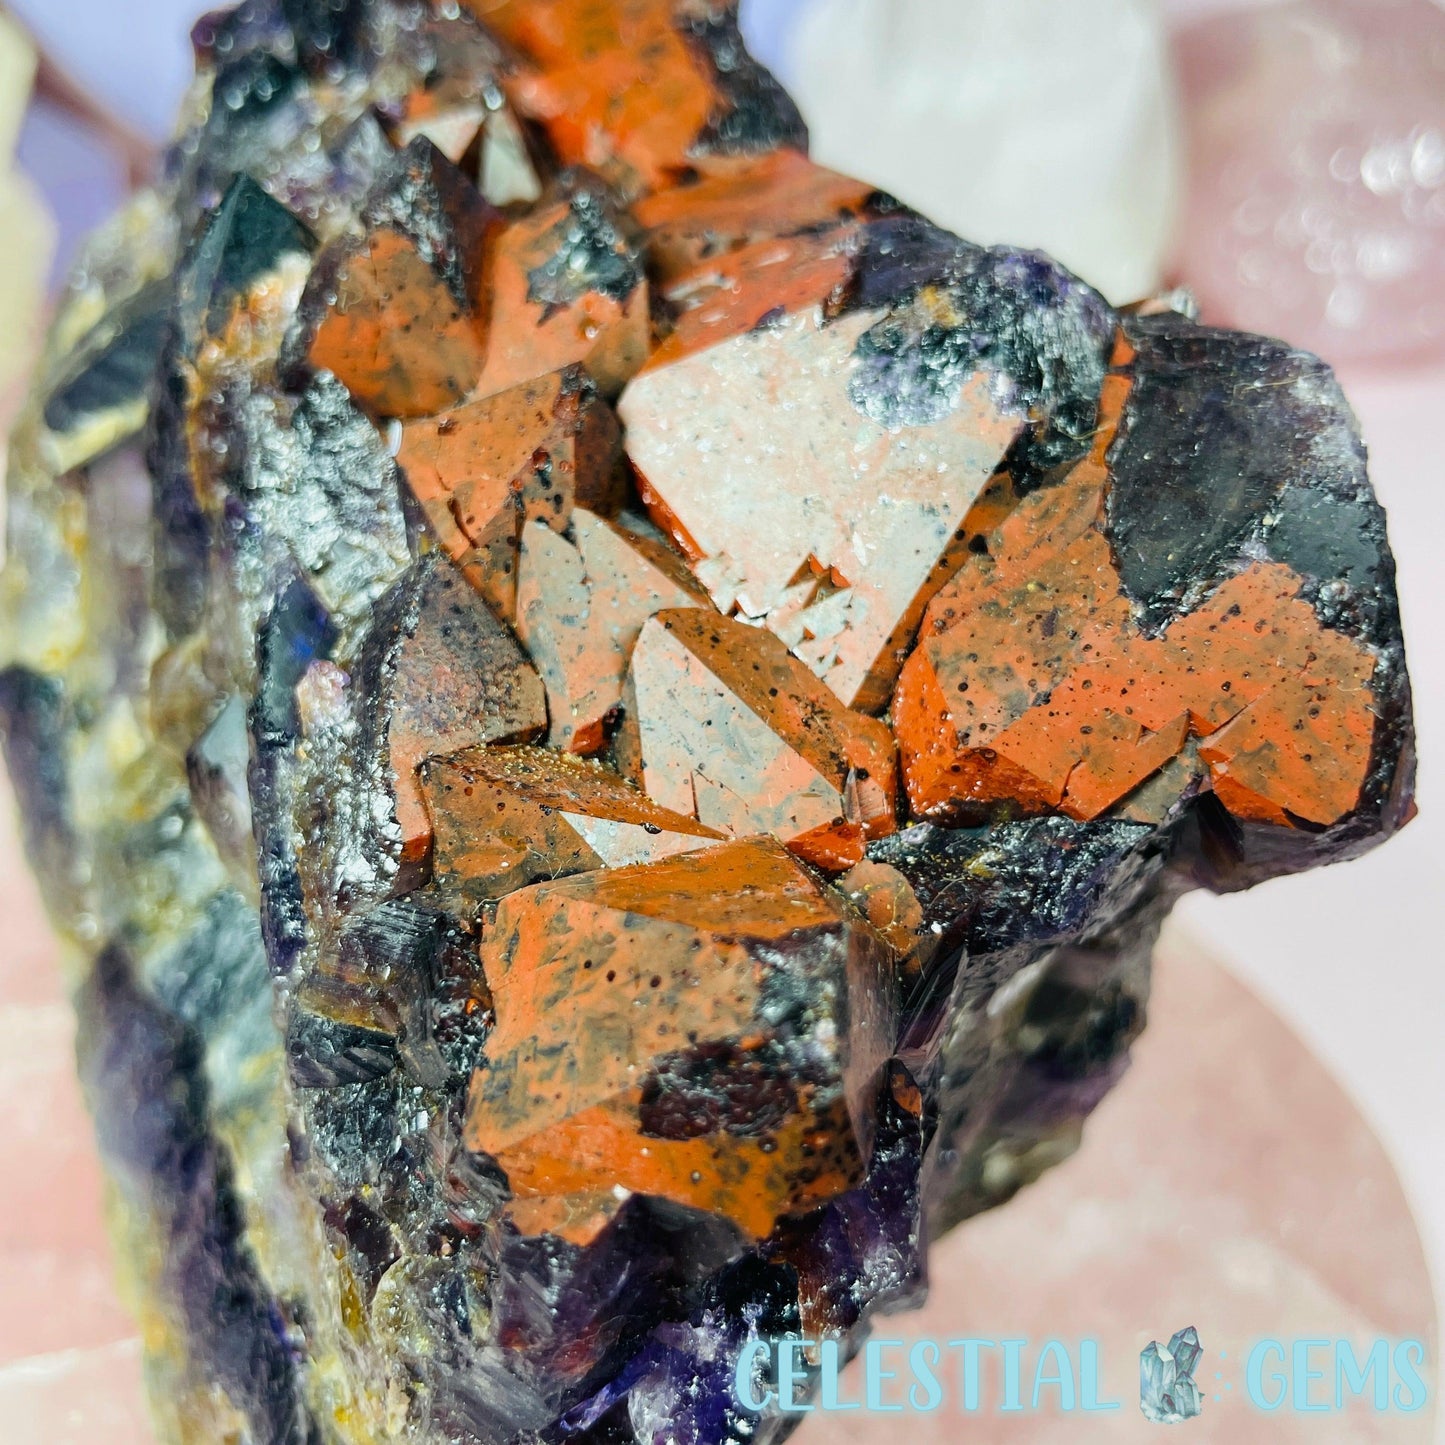 RARE Amethyst + Hematite Large Cluster A1 (Alien Amethyst)